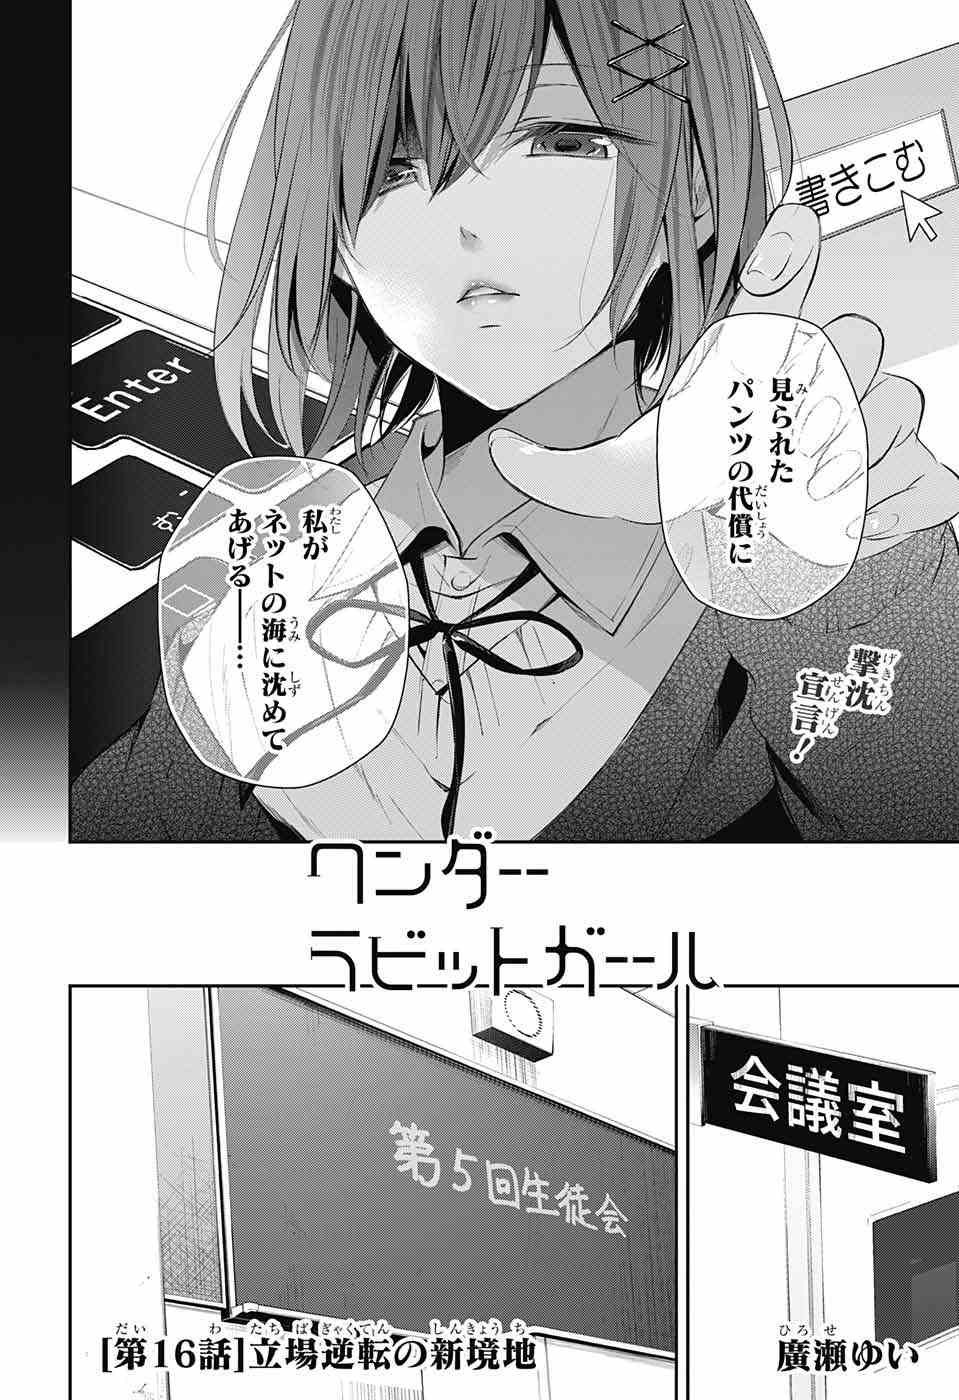 Wonder Rabbit Girl - ワンダーラビットガール - Chapter 16 - Page 2